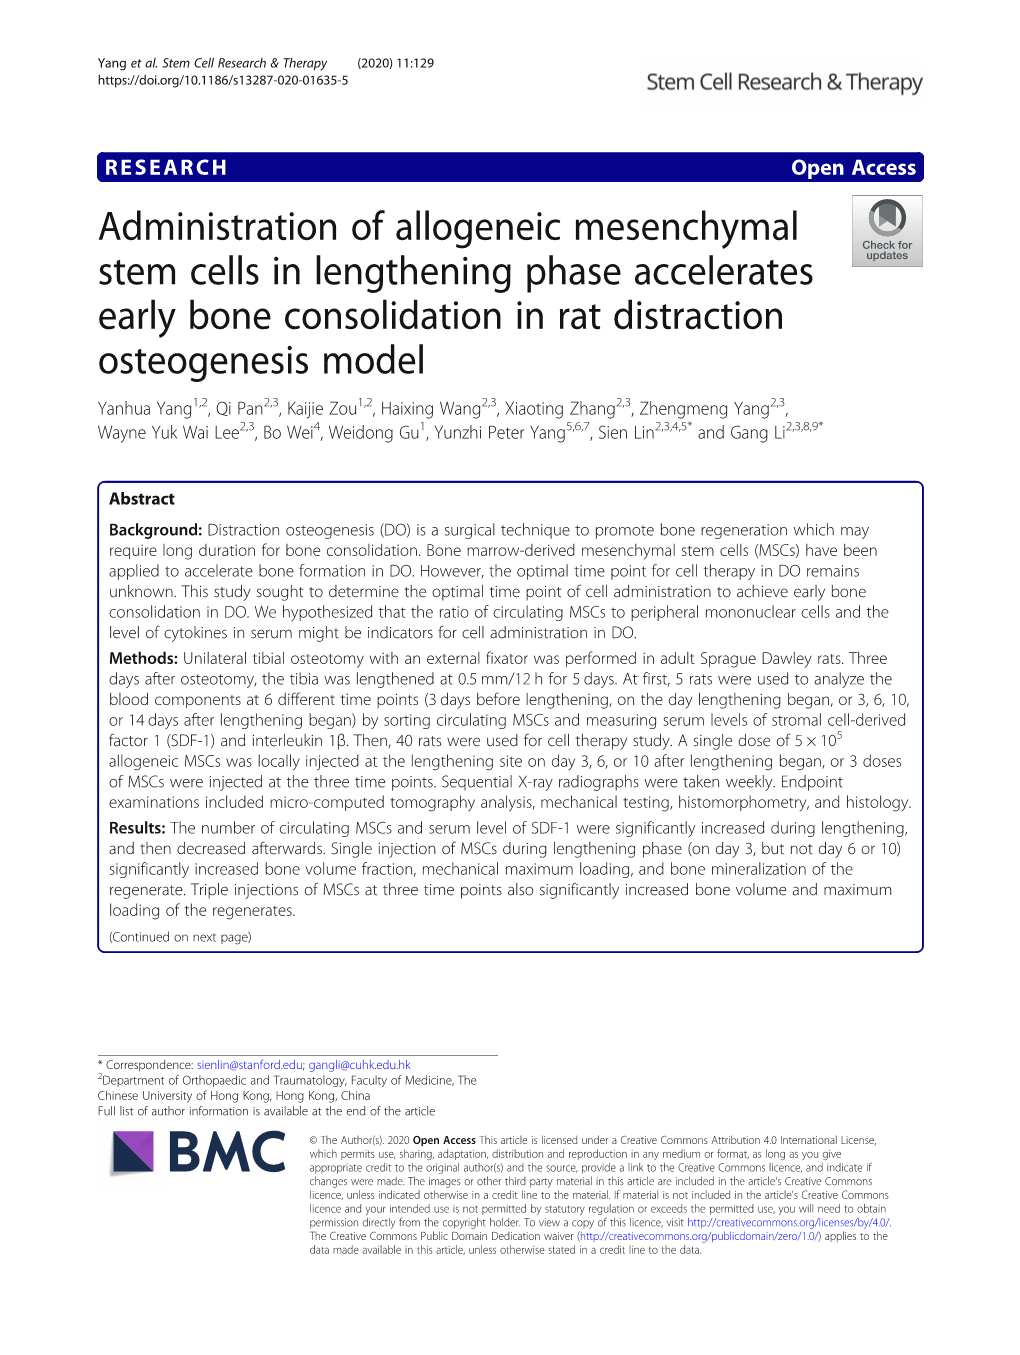 Administration of Allogeneic Mesenchymal Stem Cells In